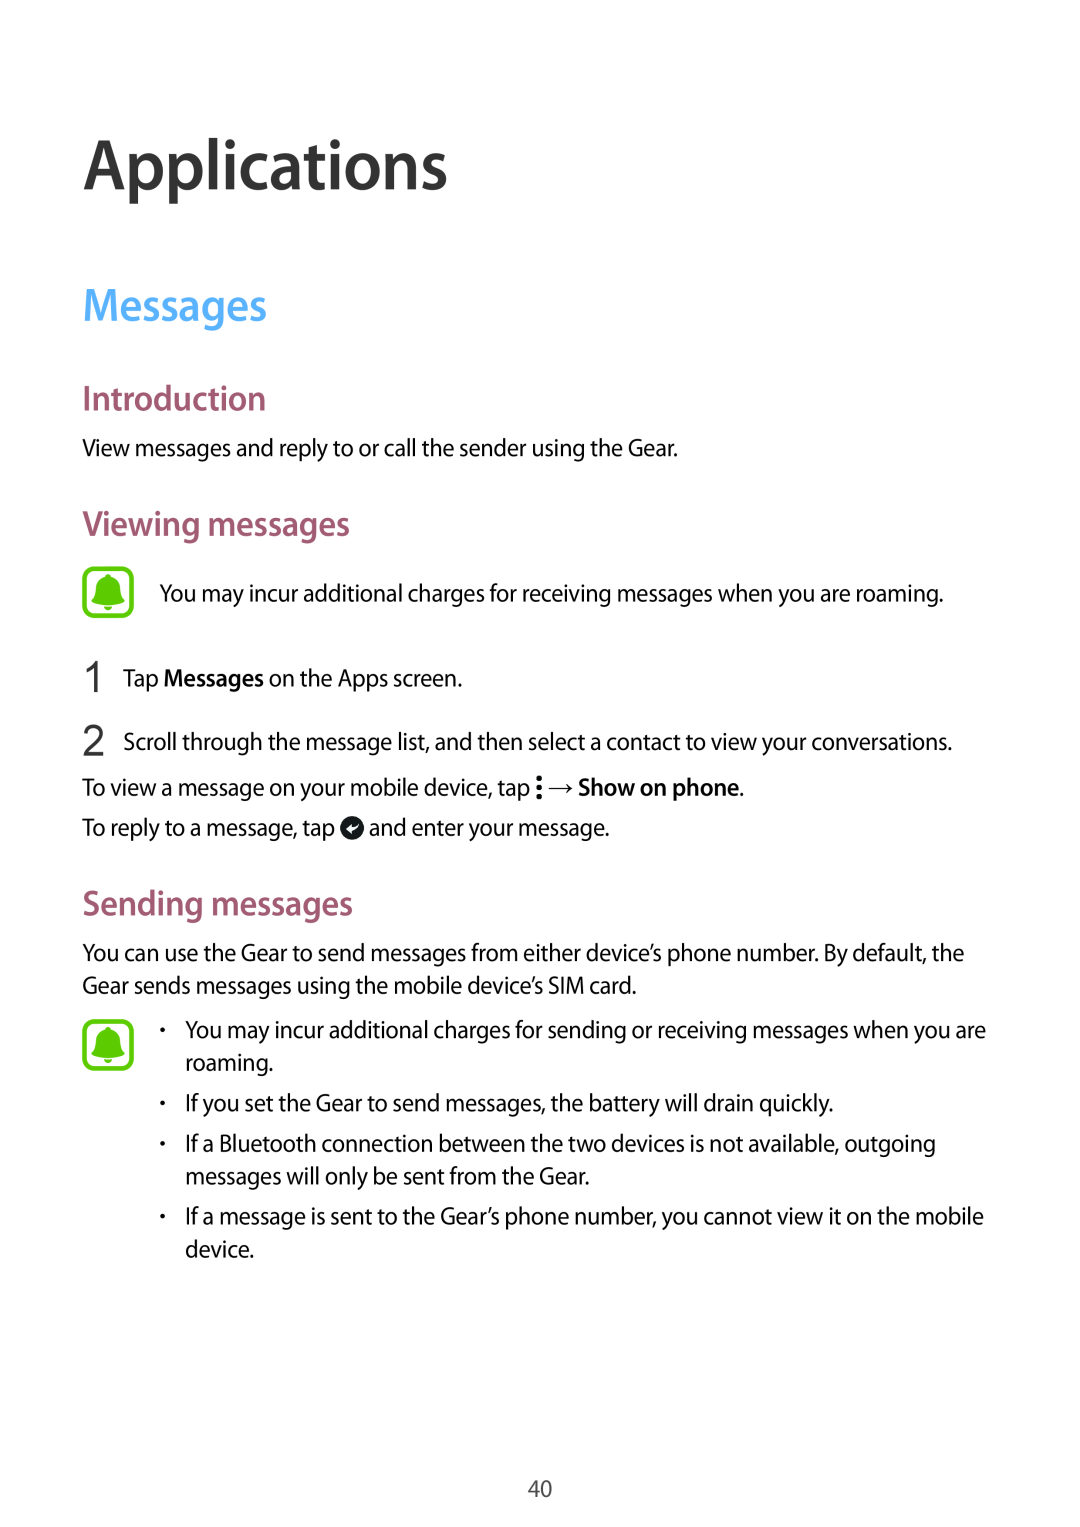 Samsung SM-R7350ZKAVD2, SM-R7350ZKAVIA manual Applications, Messages, Viewing messages, Sending messages, Introduction 